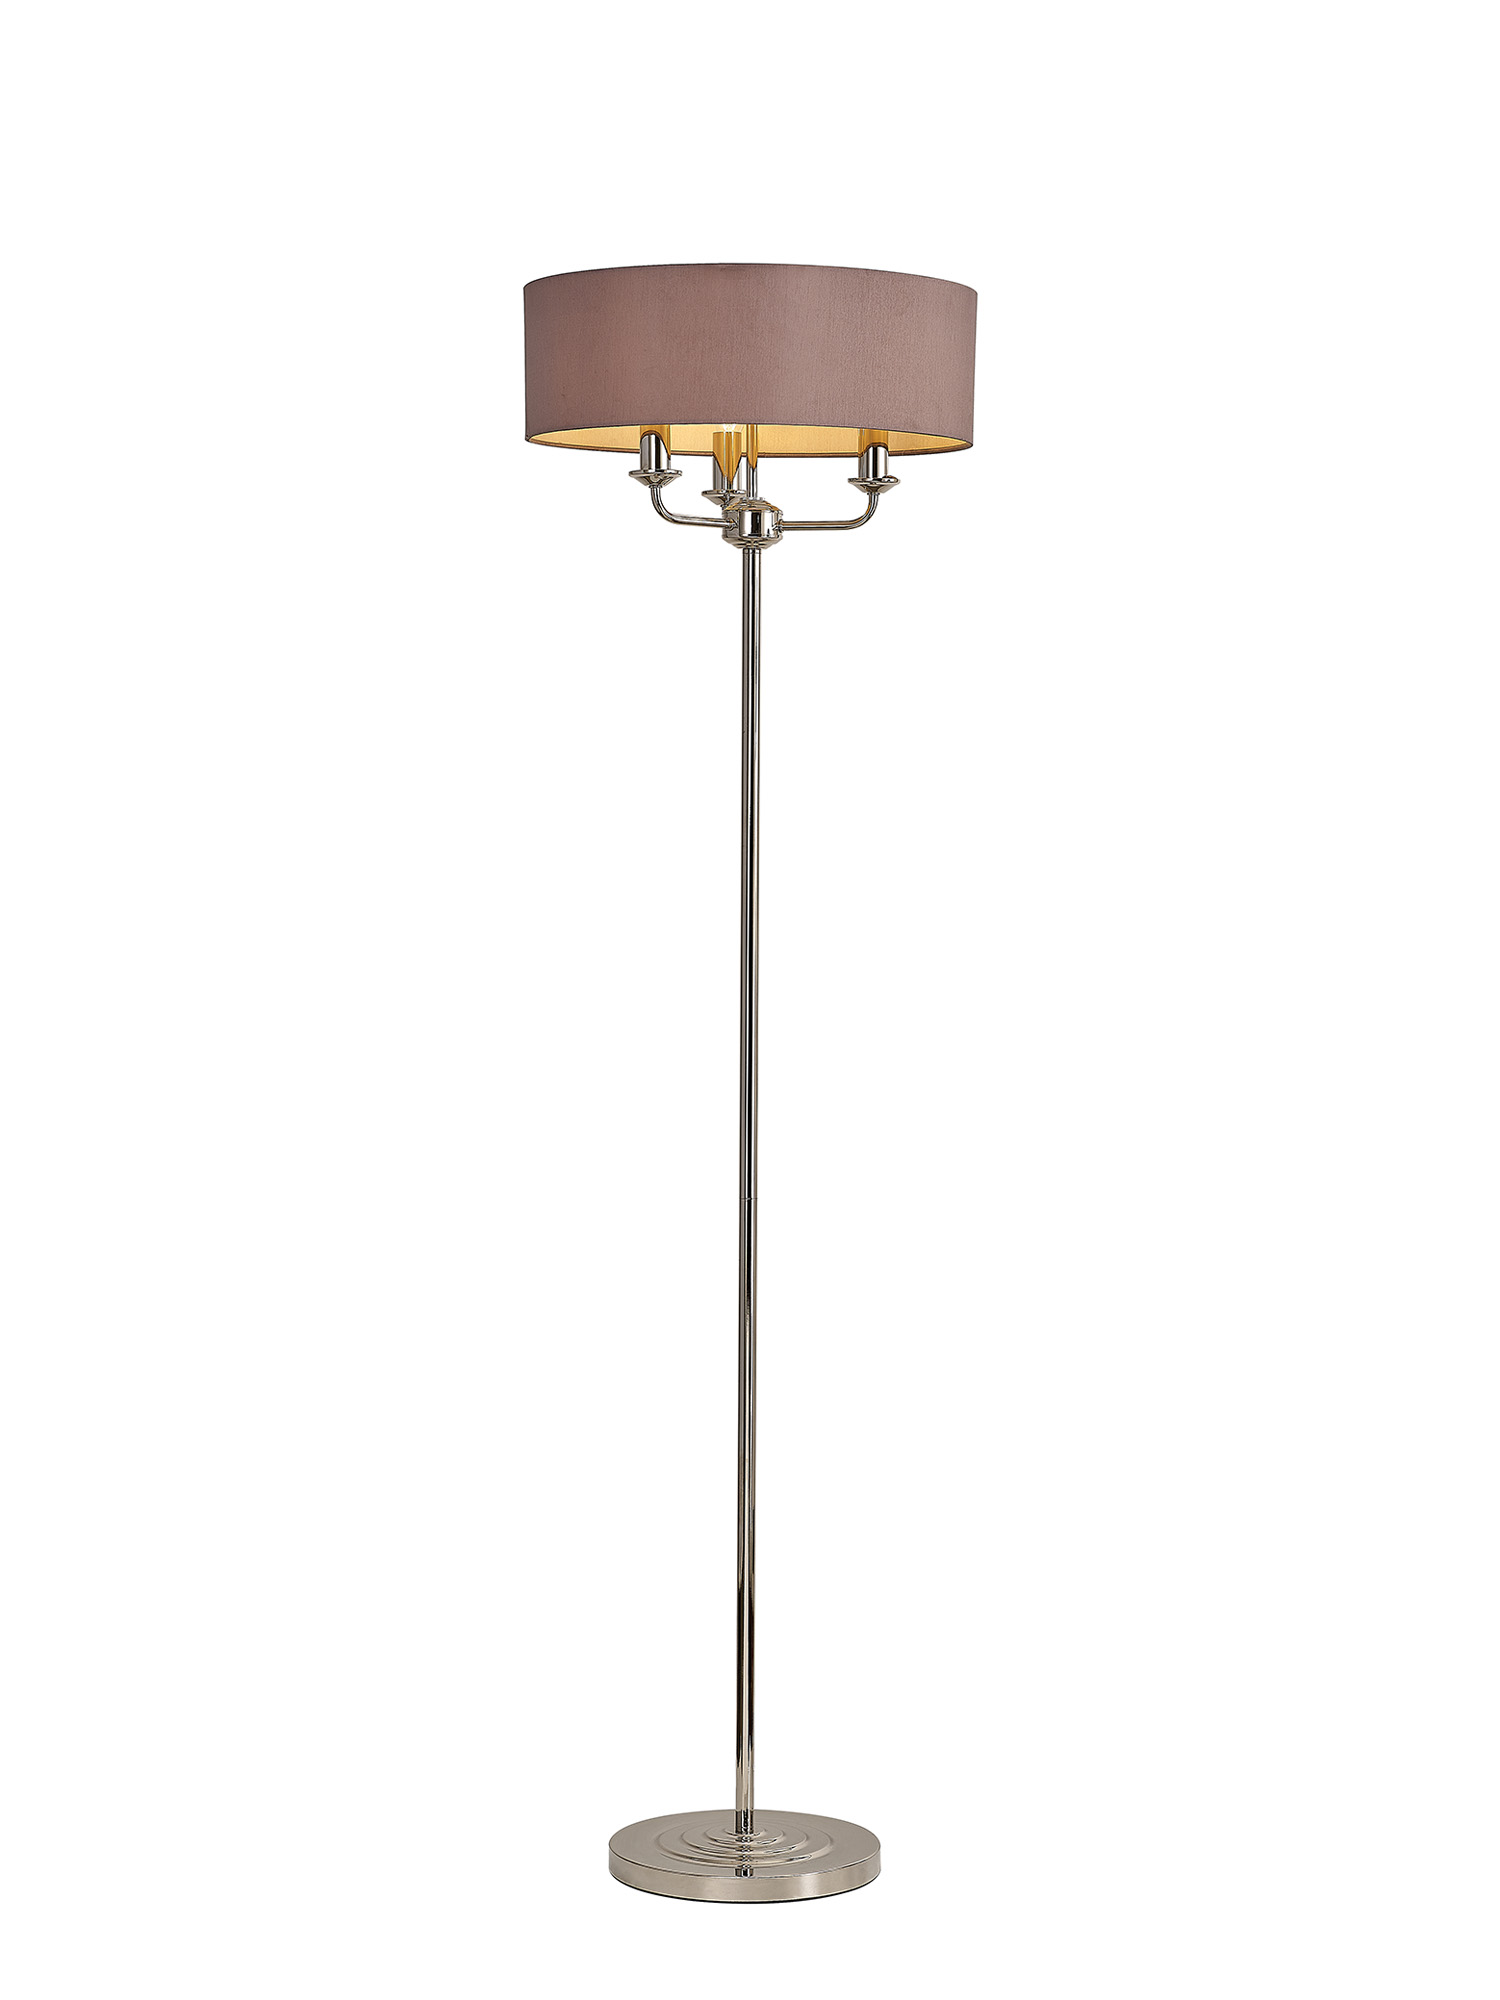 DK0886  Banyan 45cm 3 Light Floor Lamp Polished Nickel, Taupe